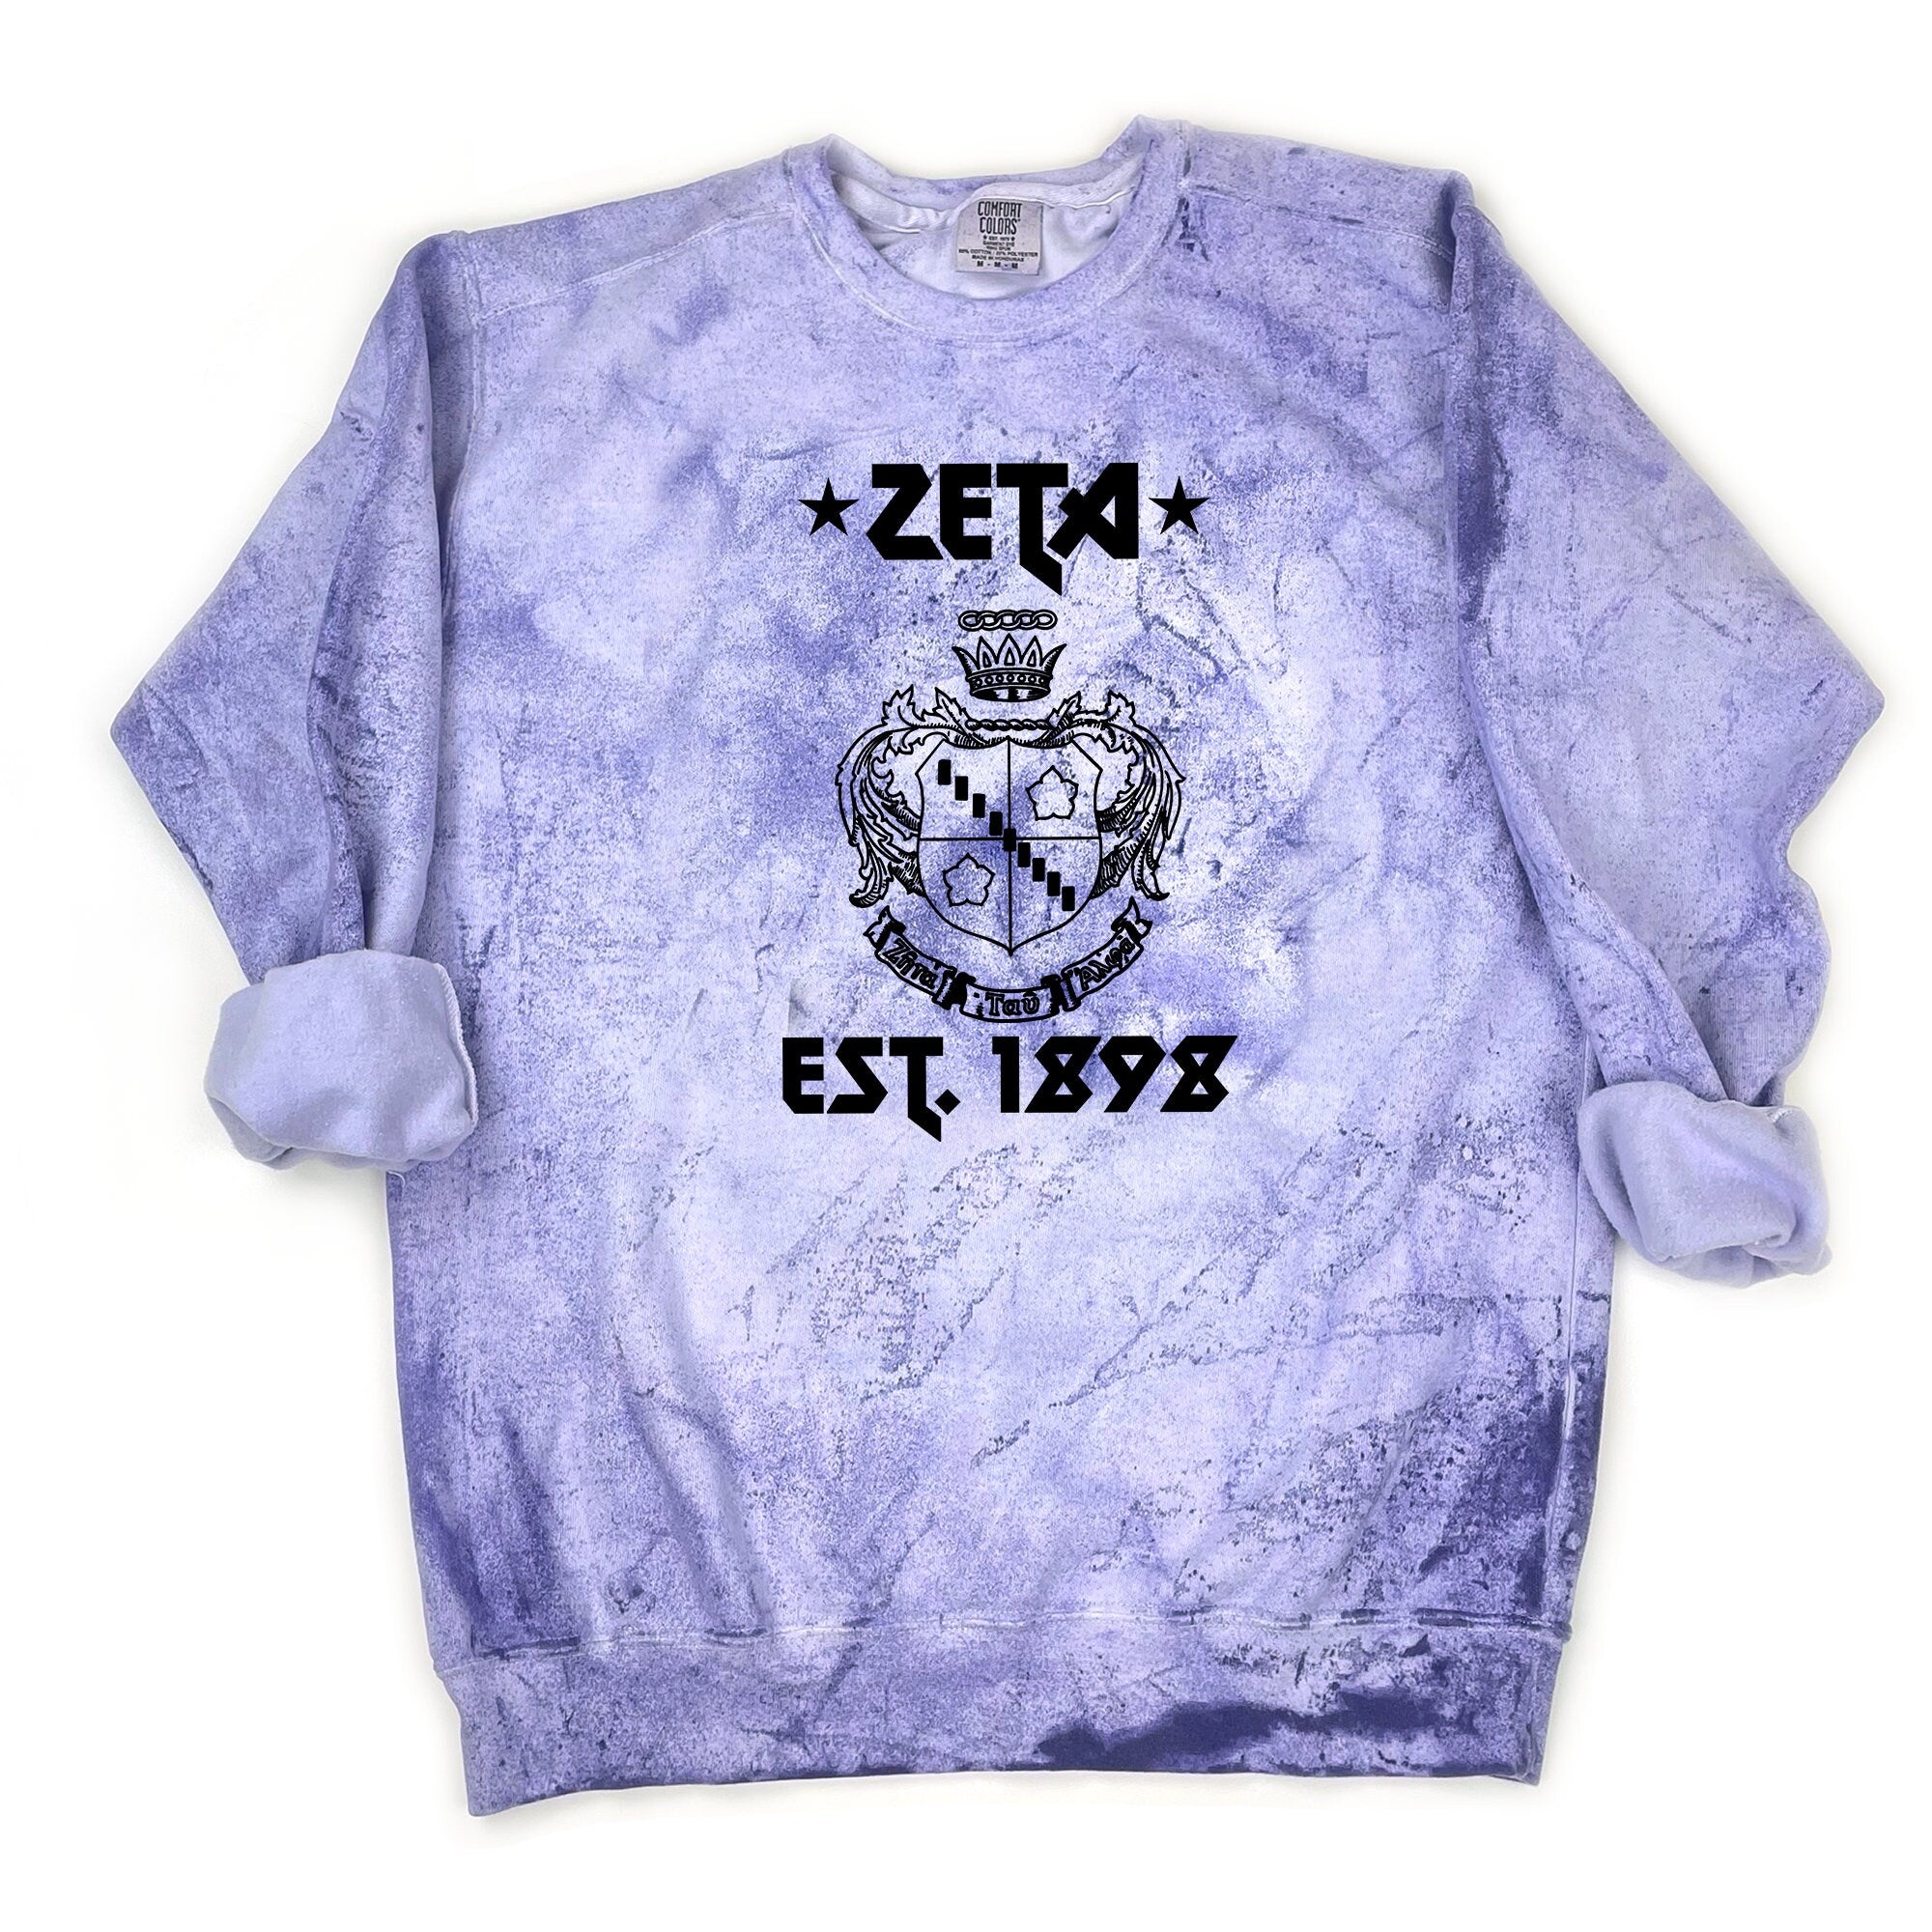 Zeta Tau Alpha Vintage Band Sweatshirt - Go Greek Chic